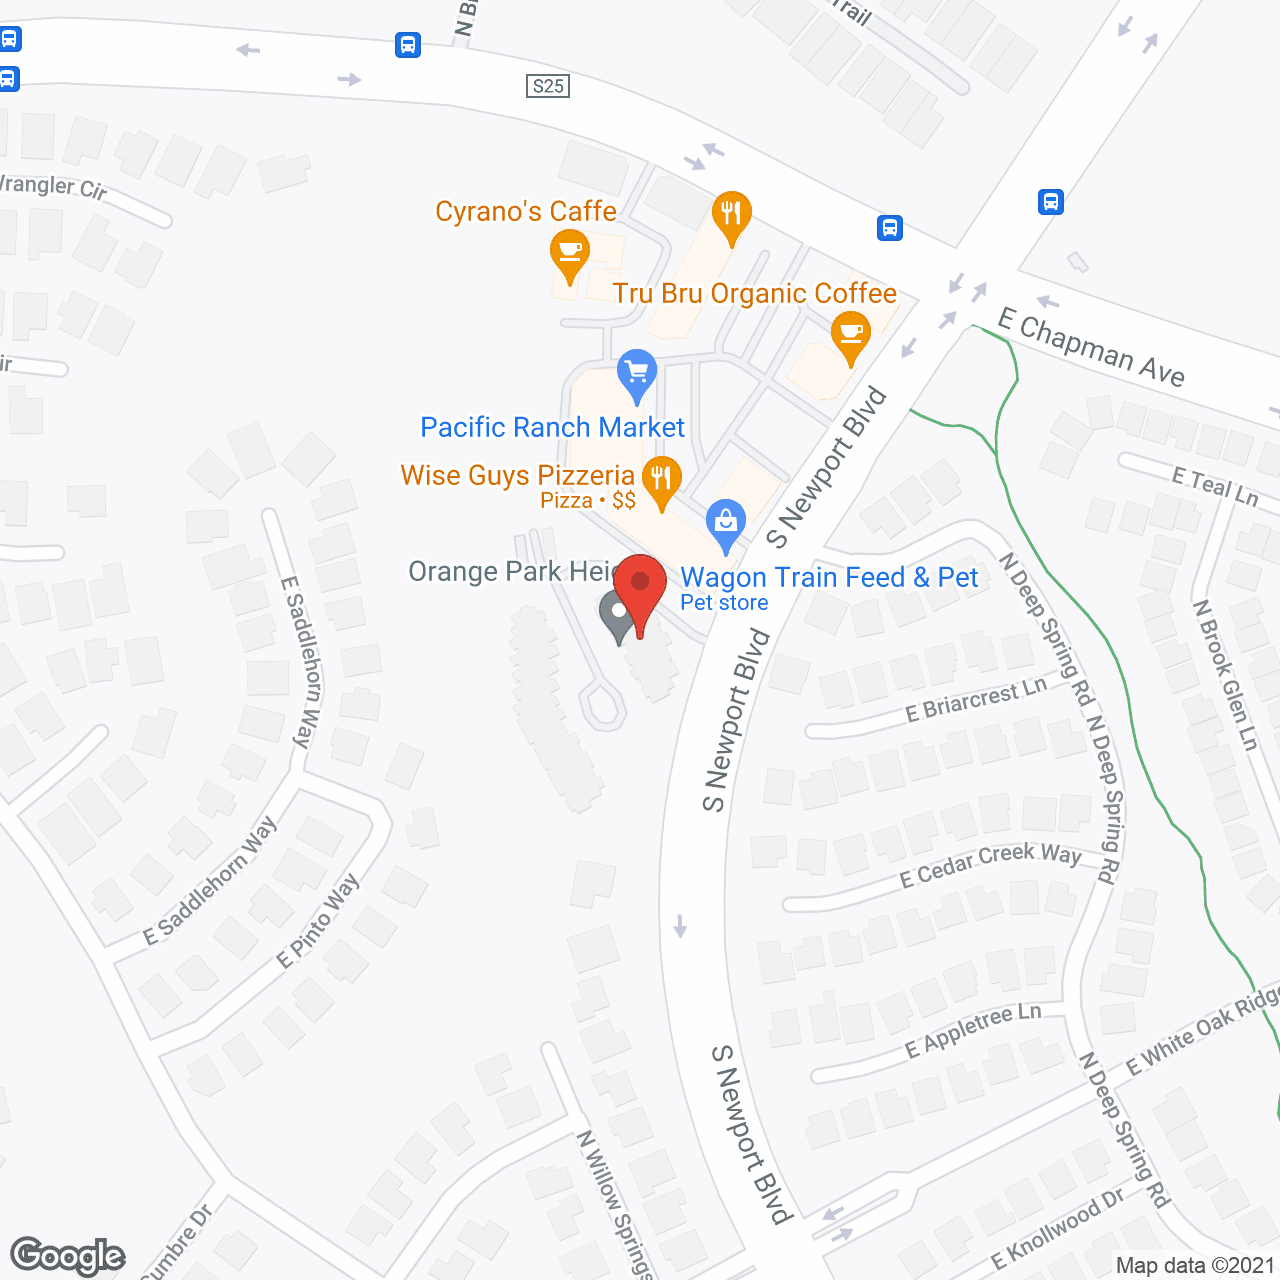 Orange Park Heights in google map